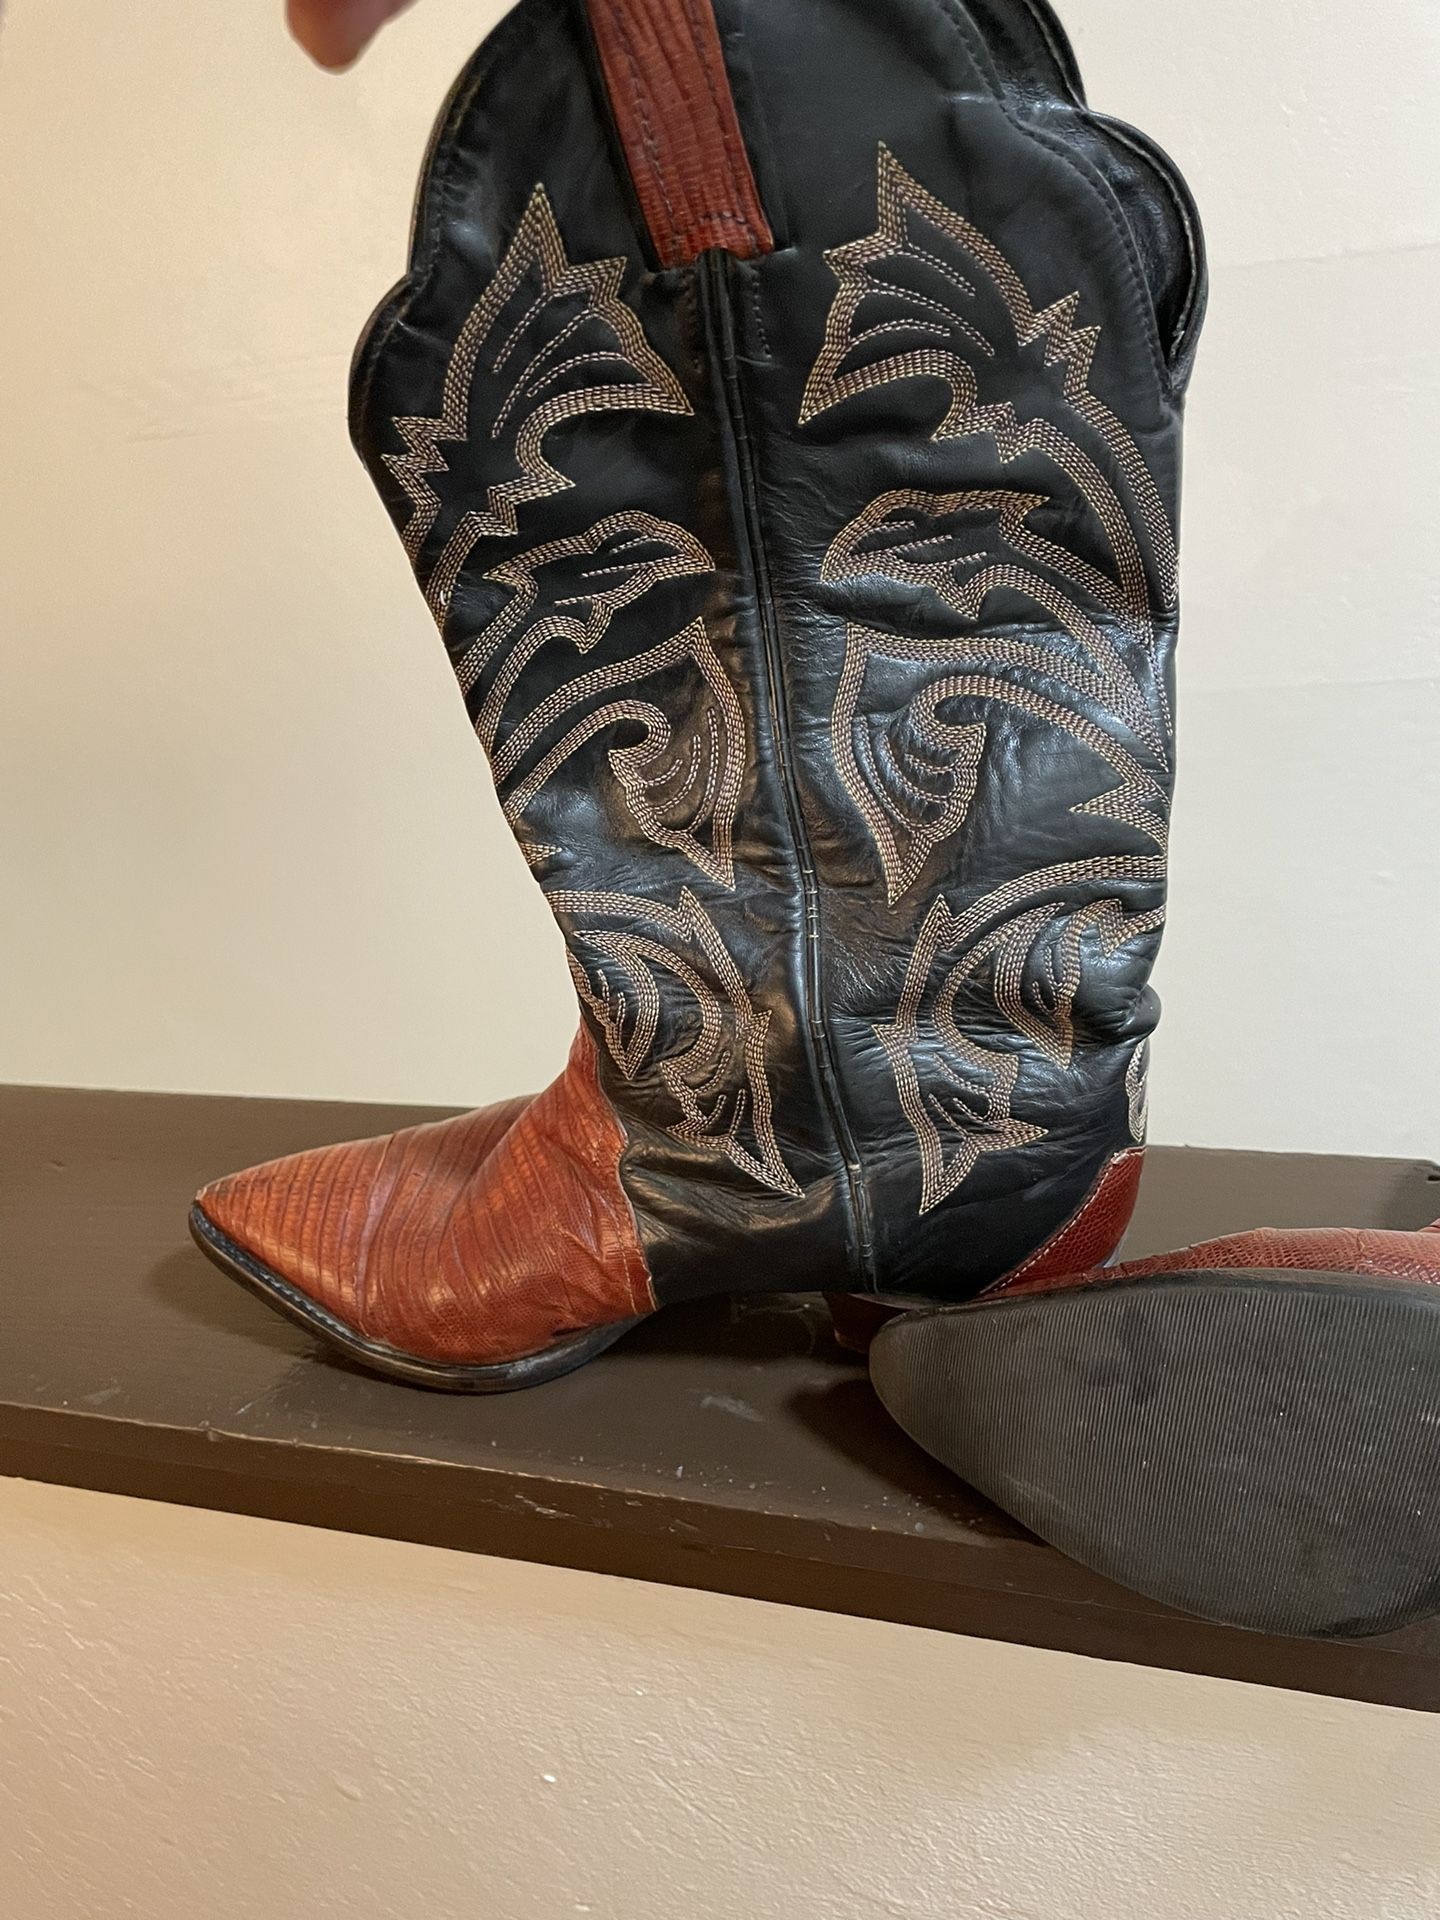 Tony Lamos Cowboy Boots